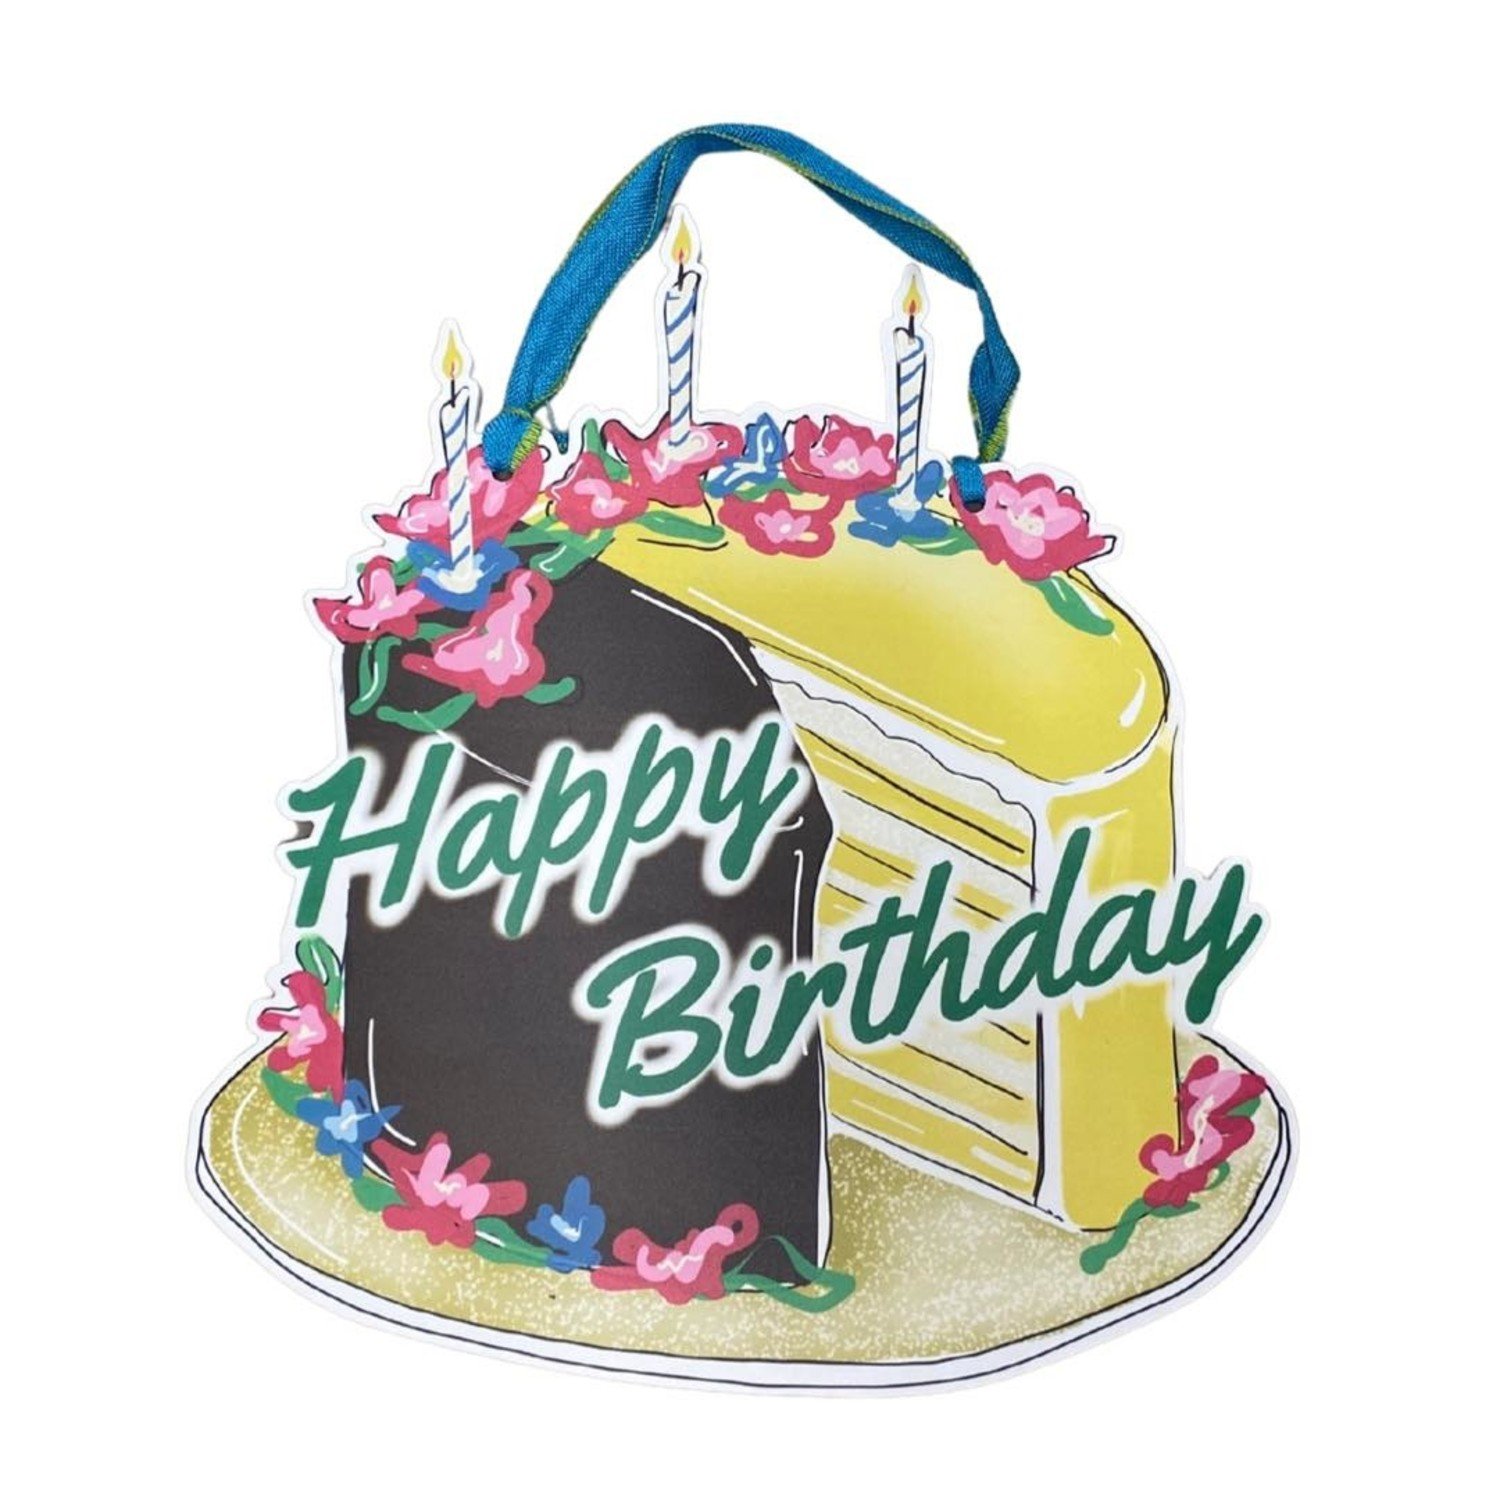 Zippy's Dobash cake | Dessert cake recipes, Dobash cake, Cupcake cakes